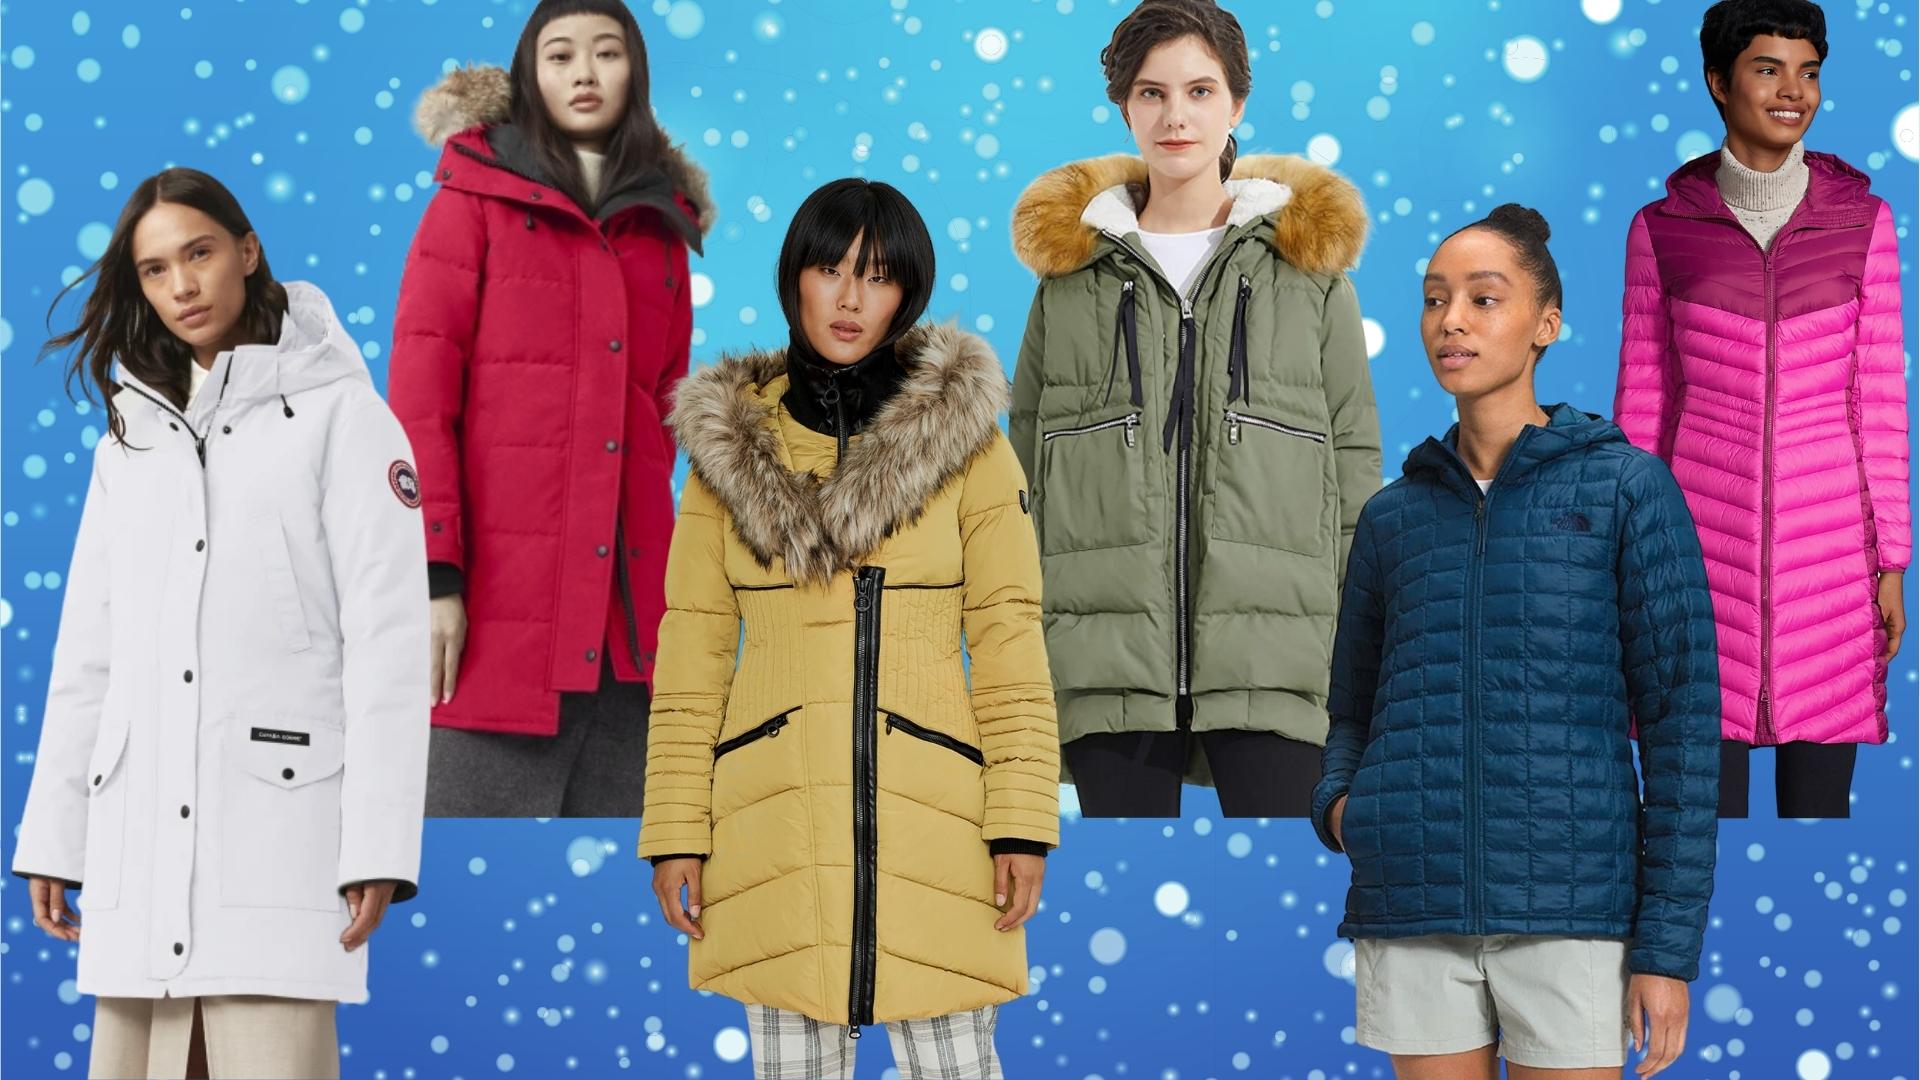 https://www.womansworld.com/wp-content/uploads/2021/02/best-winter-jackets-for-women-2.jpg